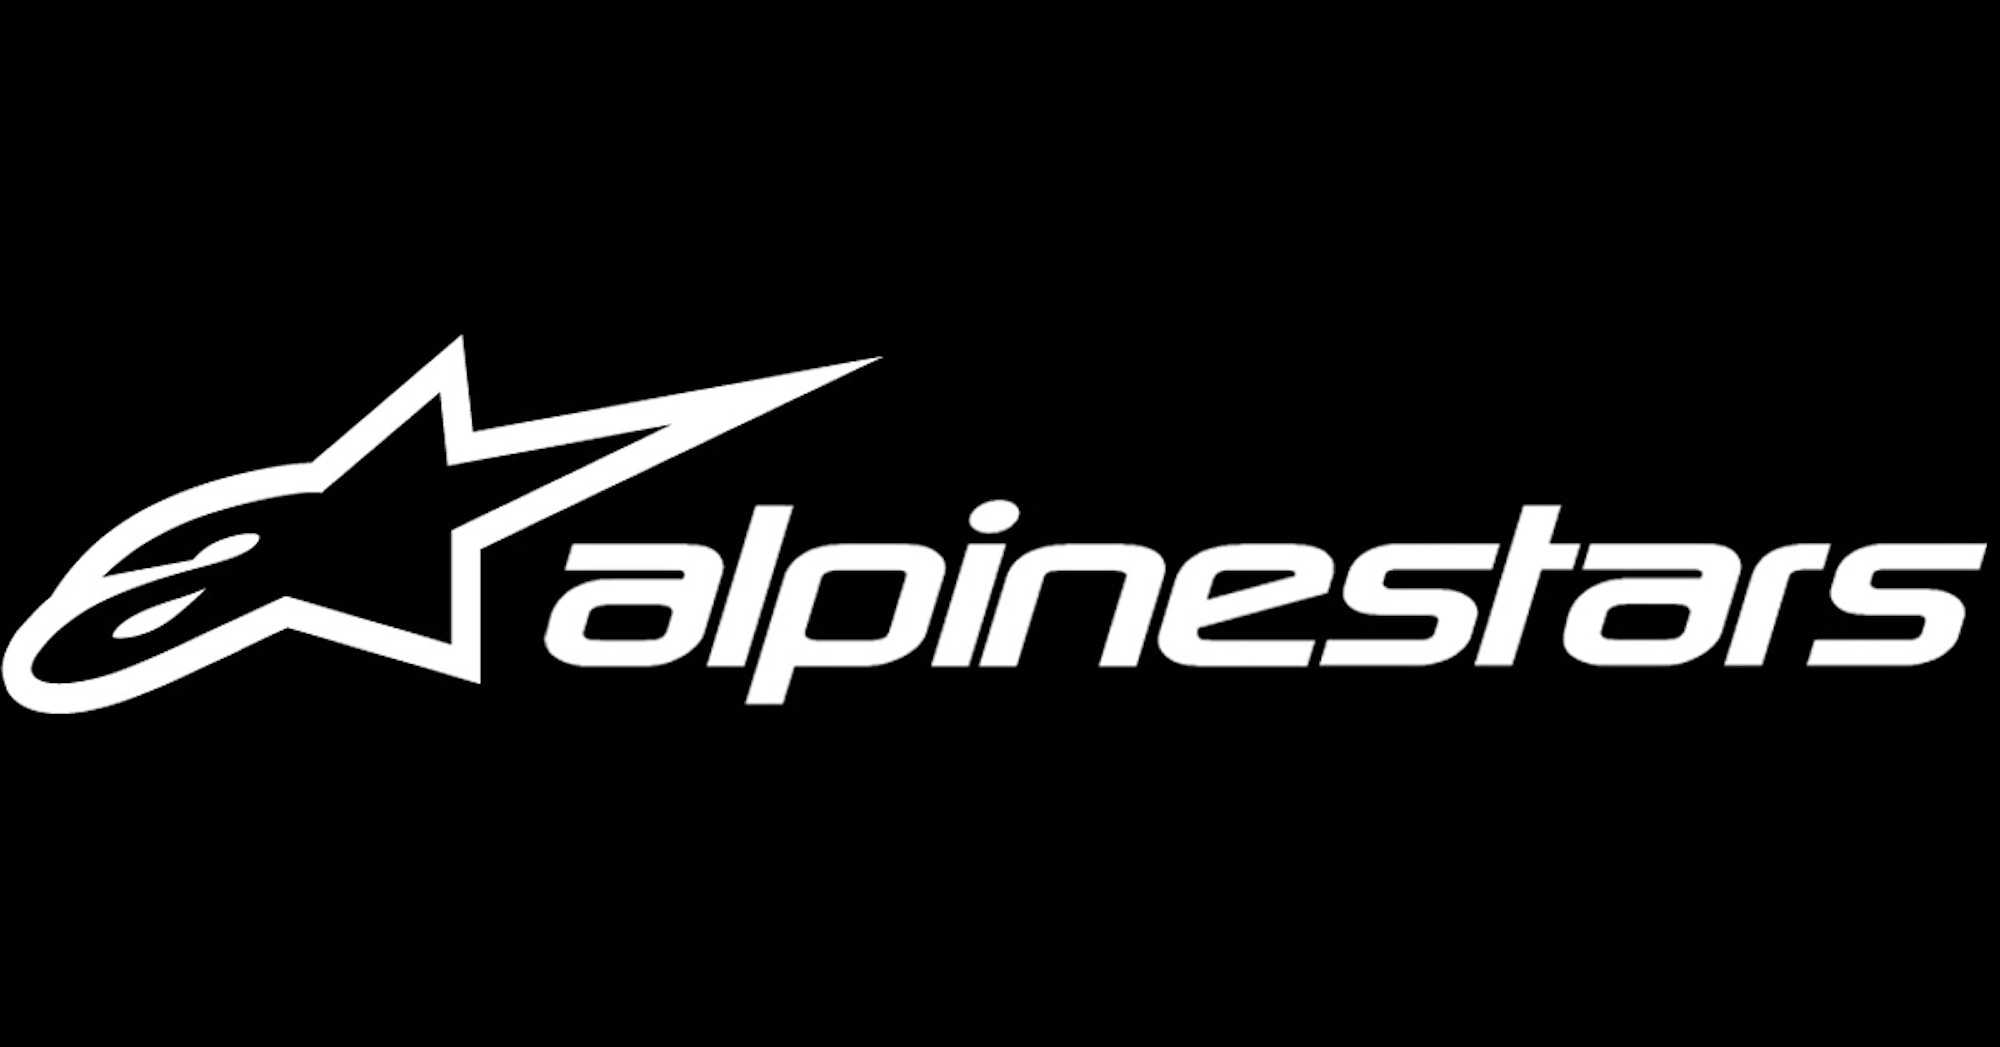 Alpinestar的徽标。照片由Alpinestars提供。